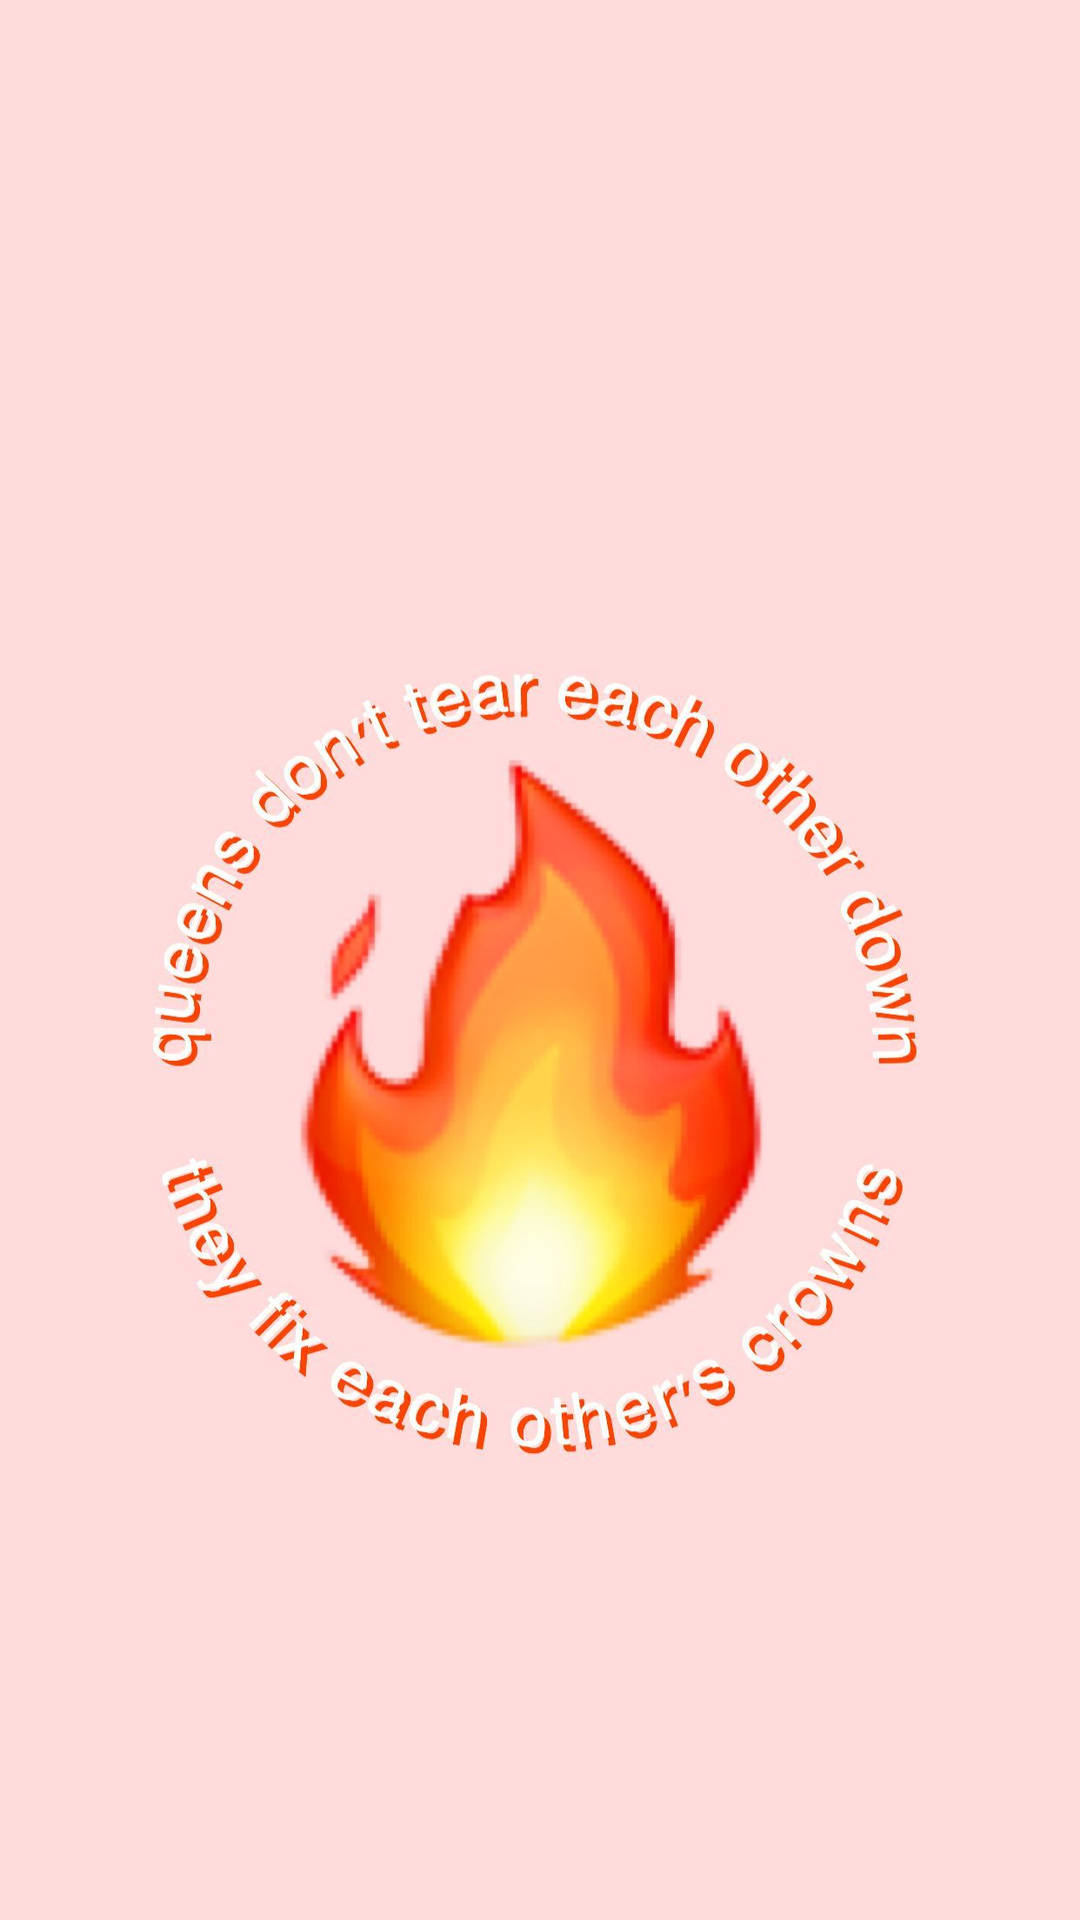 Download iPhone Baddie Fire Emoji Wallpaper